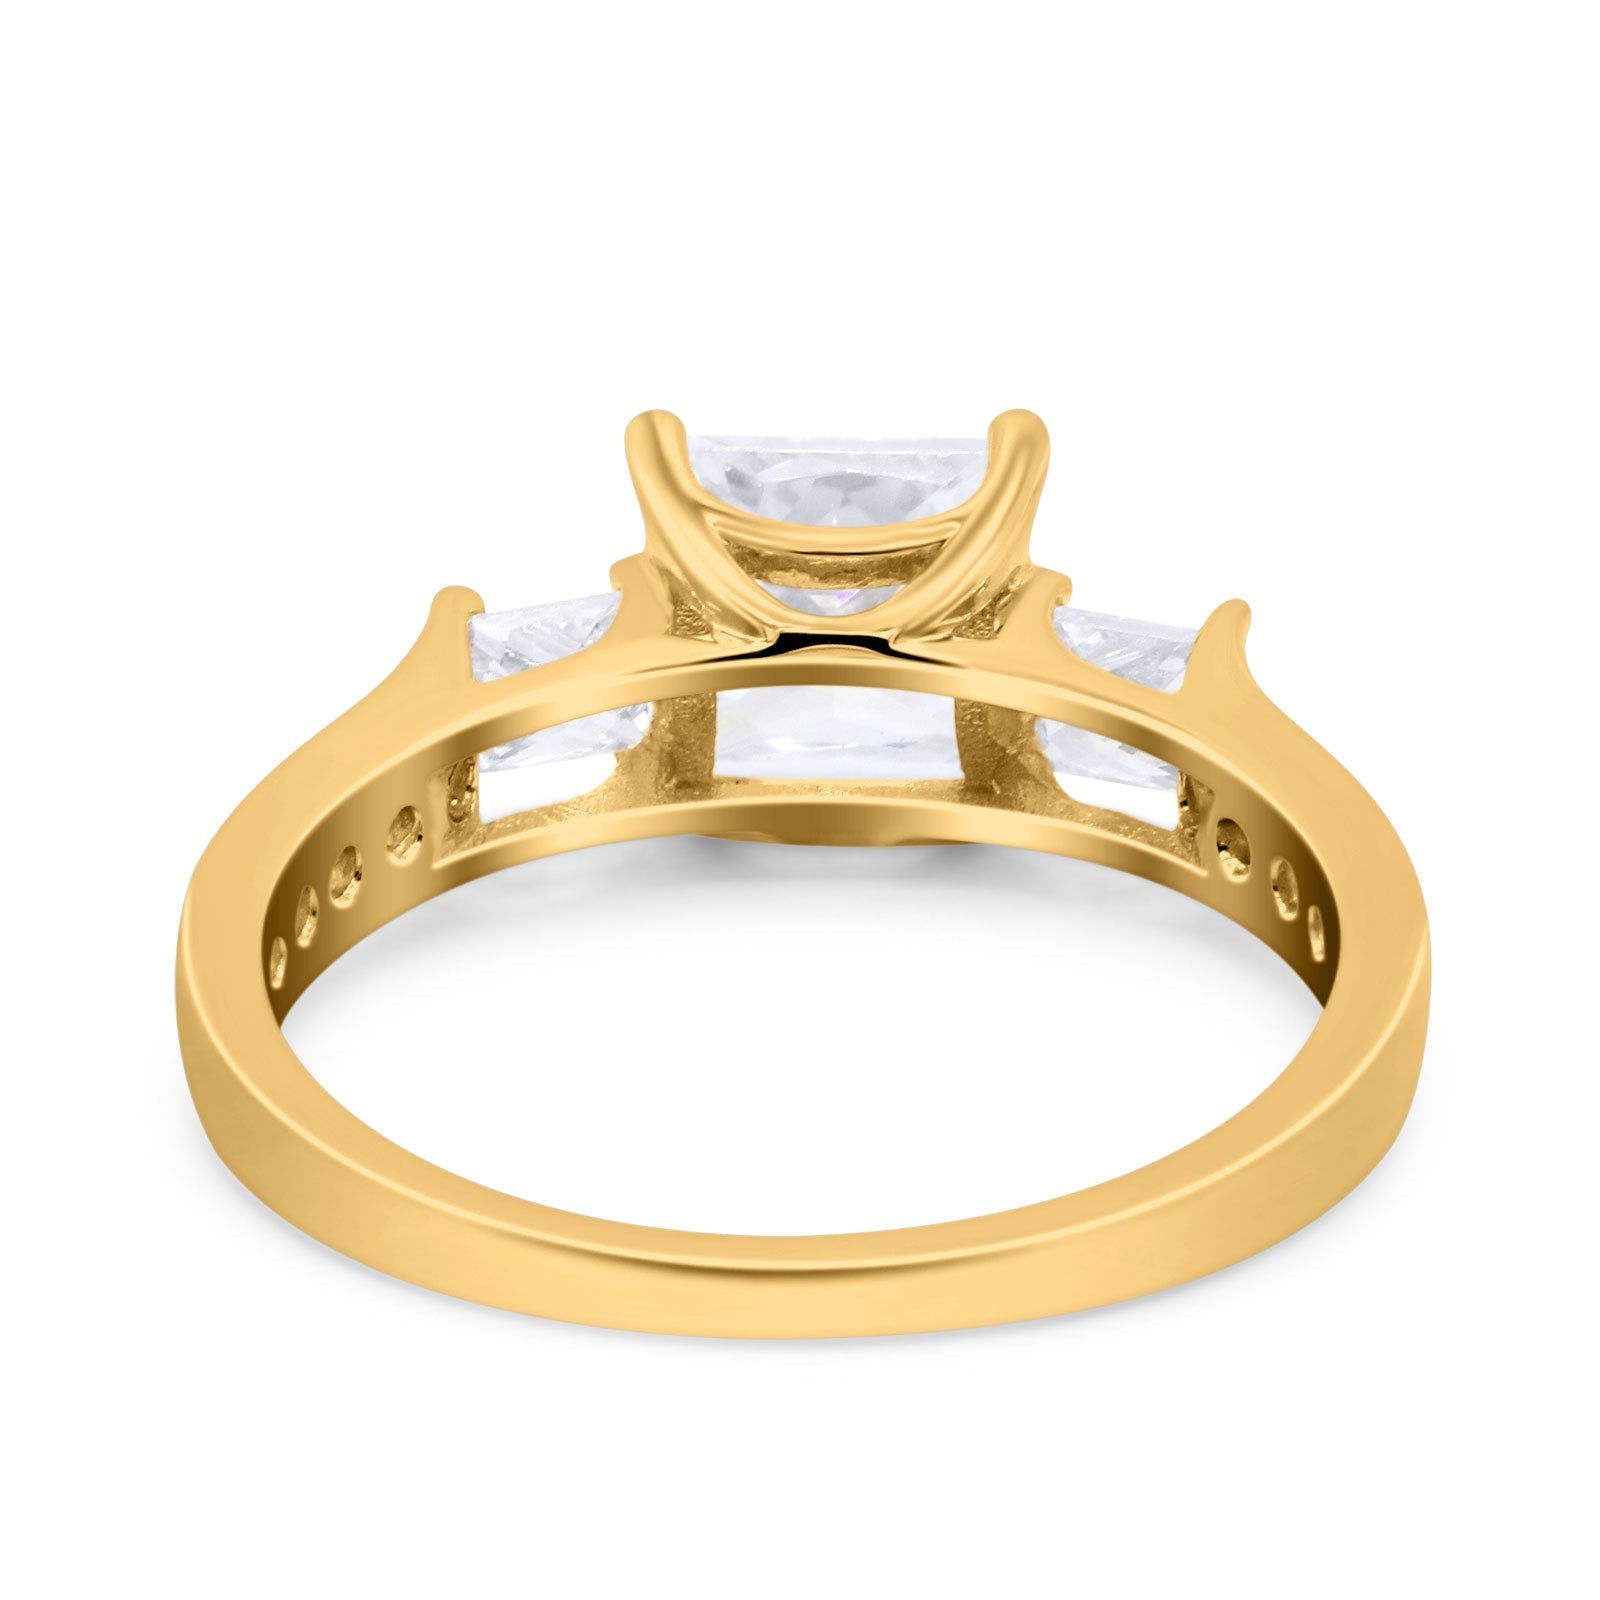 14K Gold Princess Cut Shape Art Deco Bridal Simulated Cubic Zirconia Wedding Engagement Ring